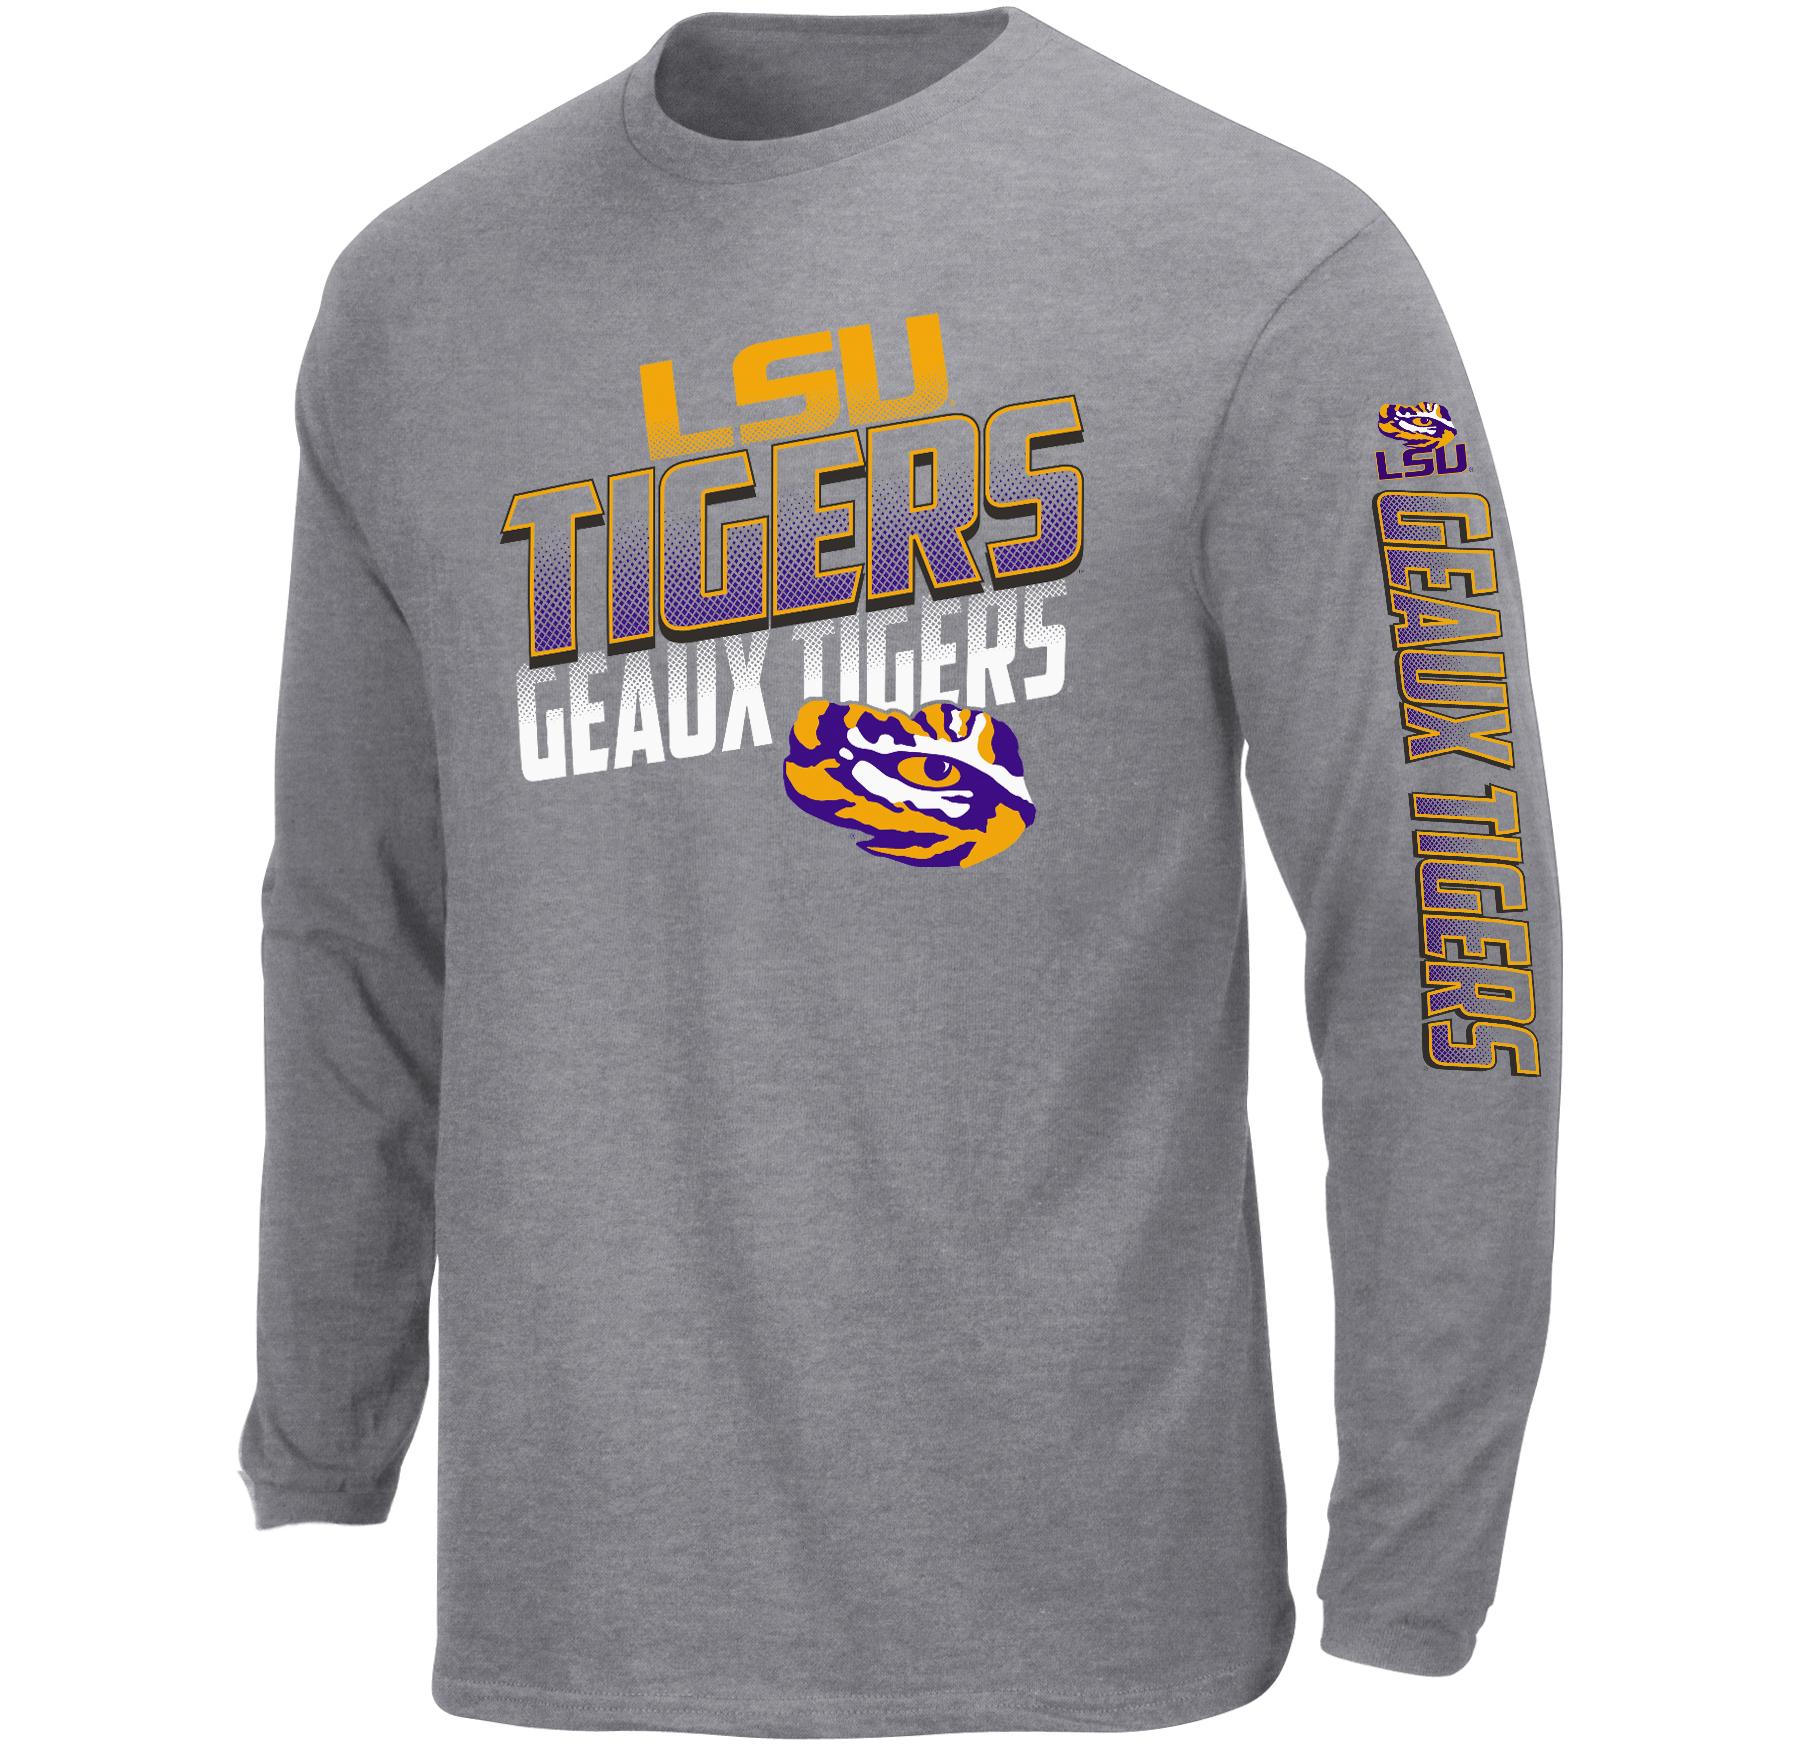 NCAA Men's Big & Tall Long-Sleeve T-Shirt - Louisiana State Tigers